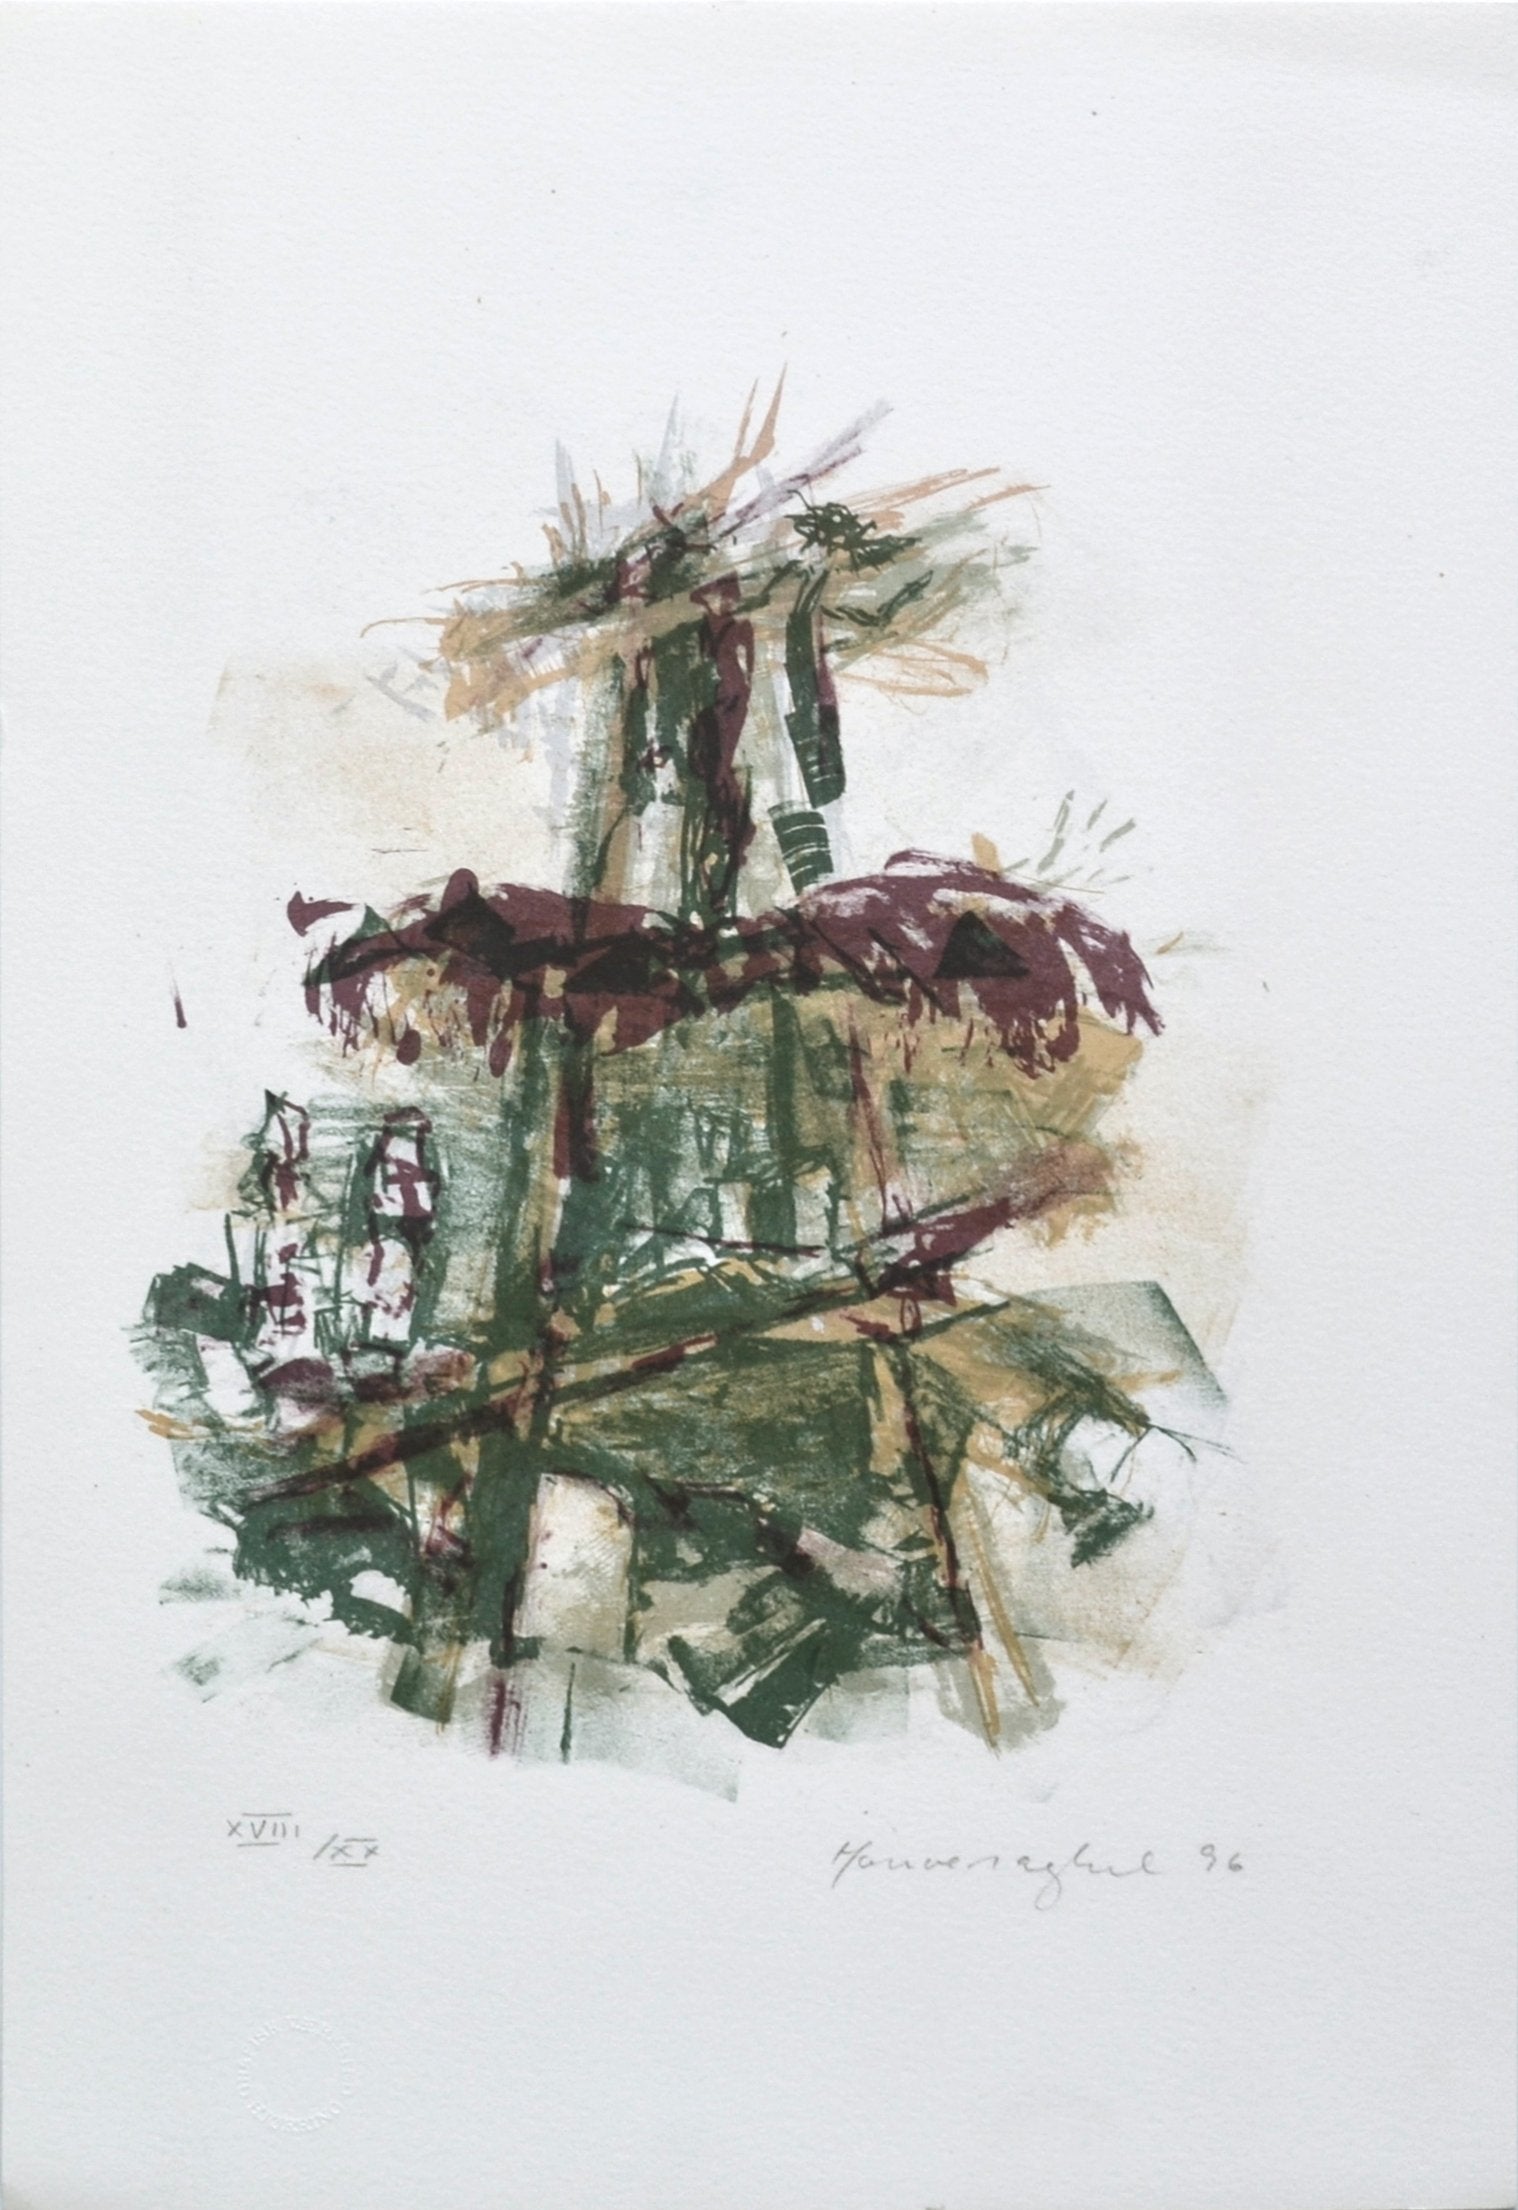 Anita Houvenaeghel - "Untitled"